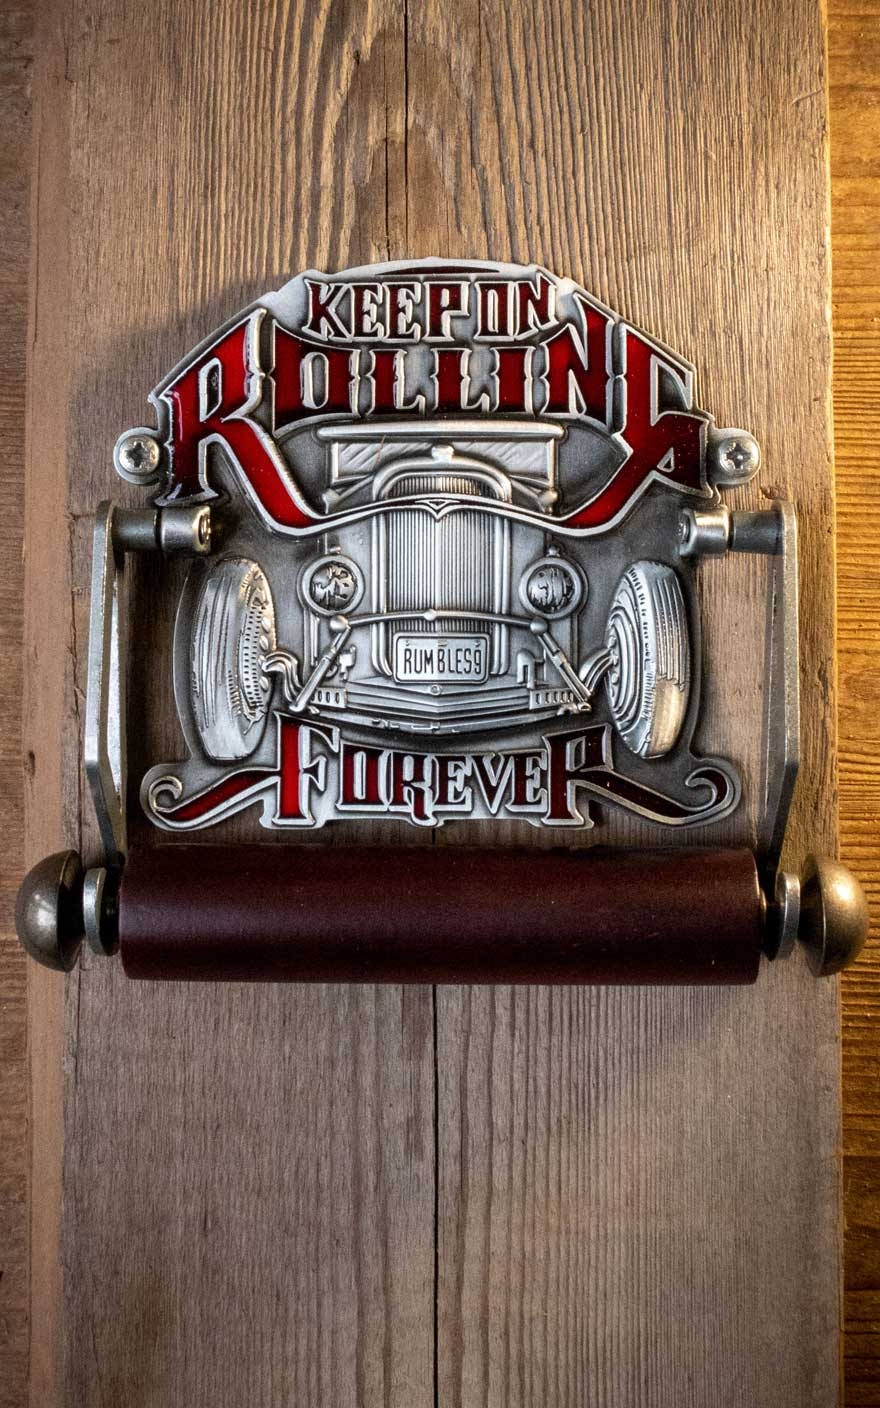 Rumble59 - Toilettenpapierhalter - Keep on Rolling von Rumble59